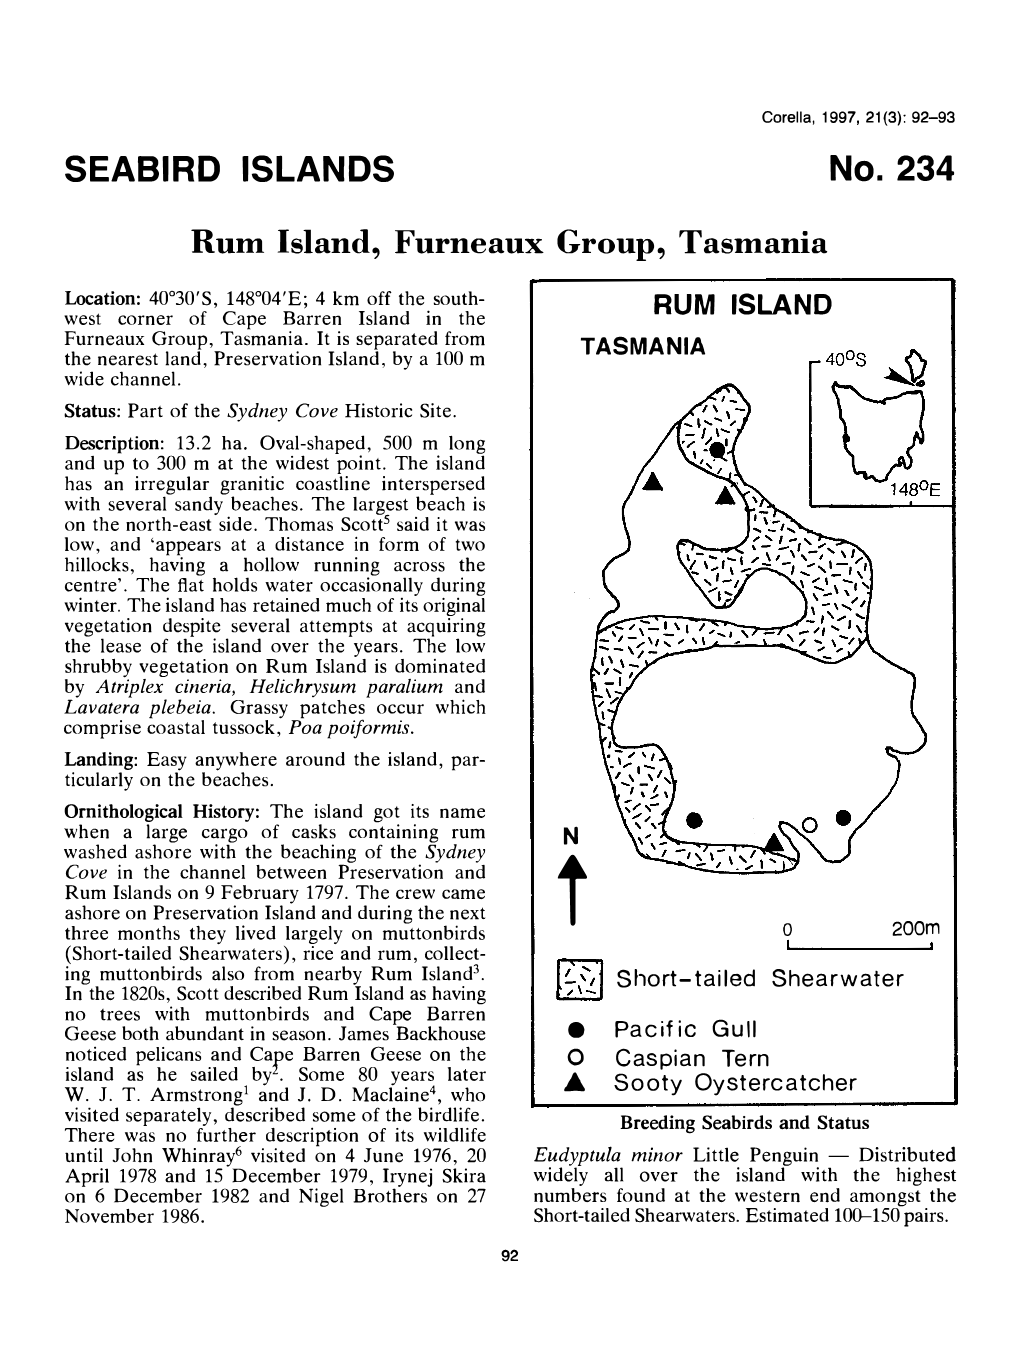 Brothers N.P. Et Al (1997). Seabird Islands: No. 234 Rum Island